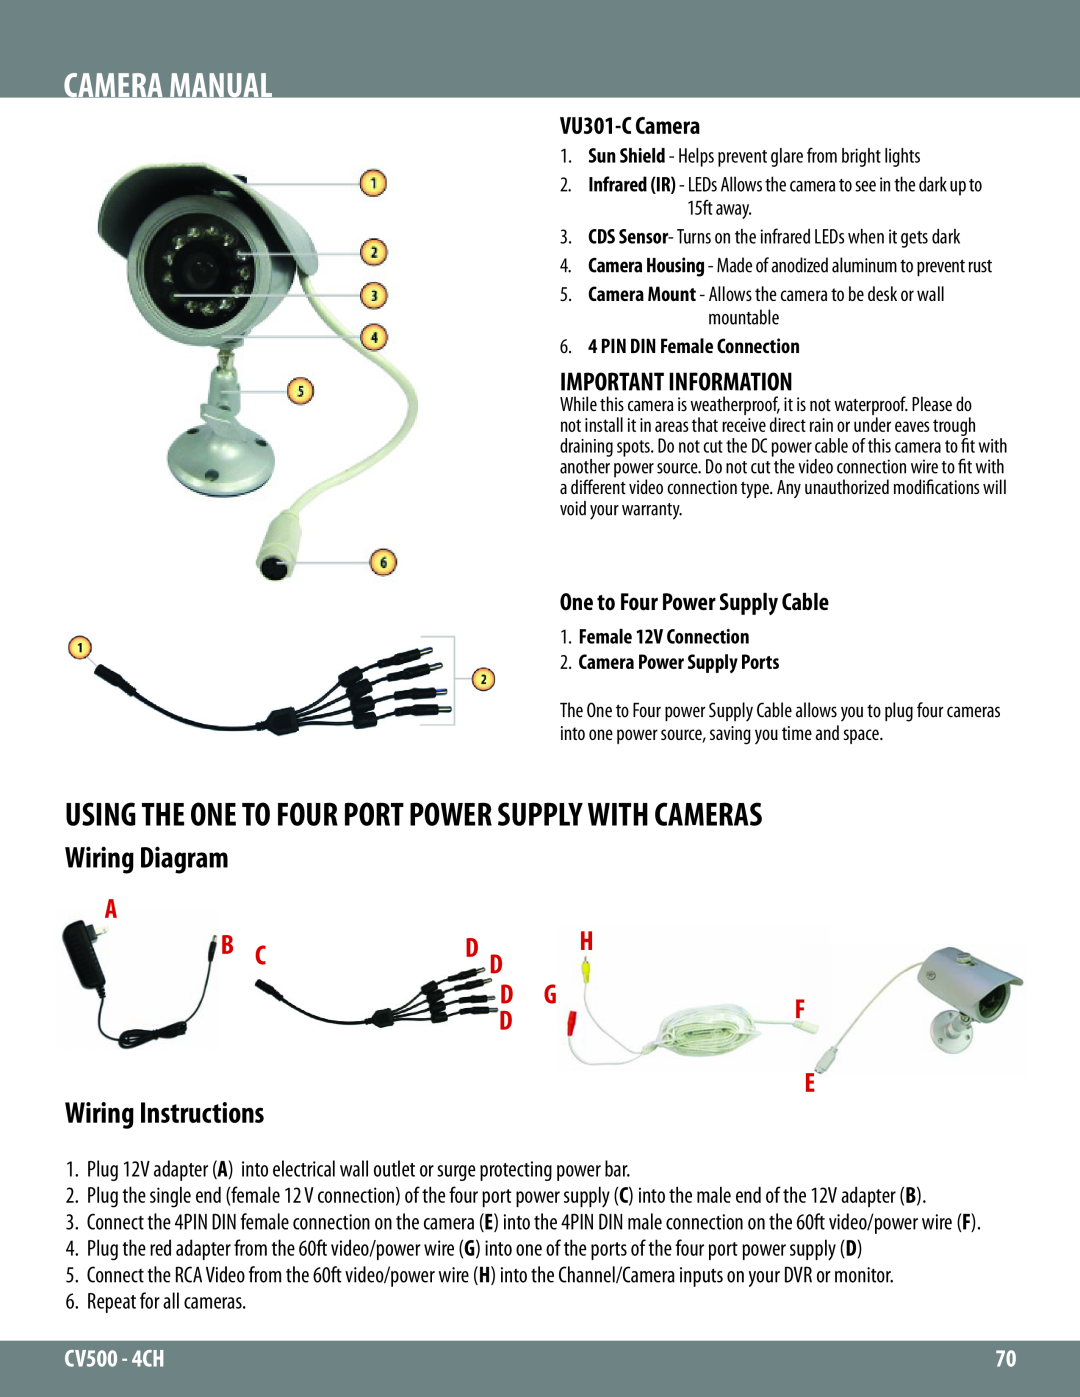 SVAT Electronics 2CV500 - 4CH Camera Manual, Wiring Diagram, Wiring Instructions, A B Cd D H D Gf D E, VU301-CCamera 